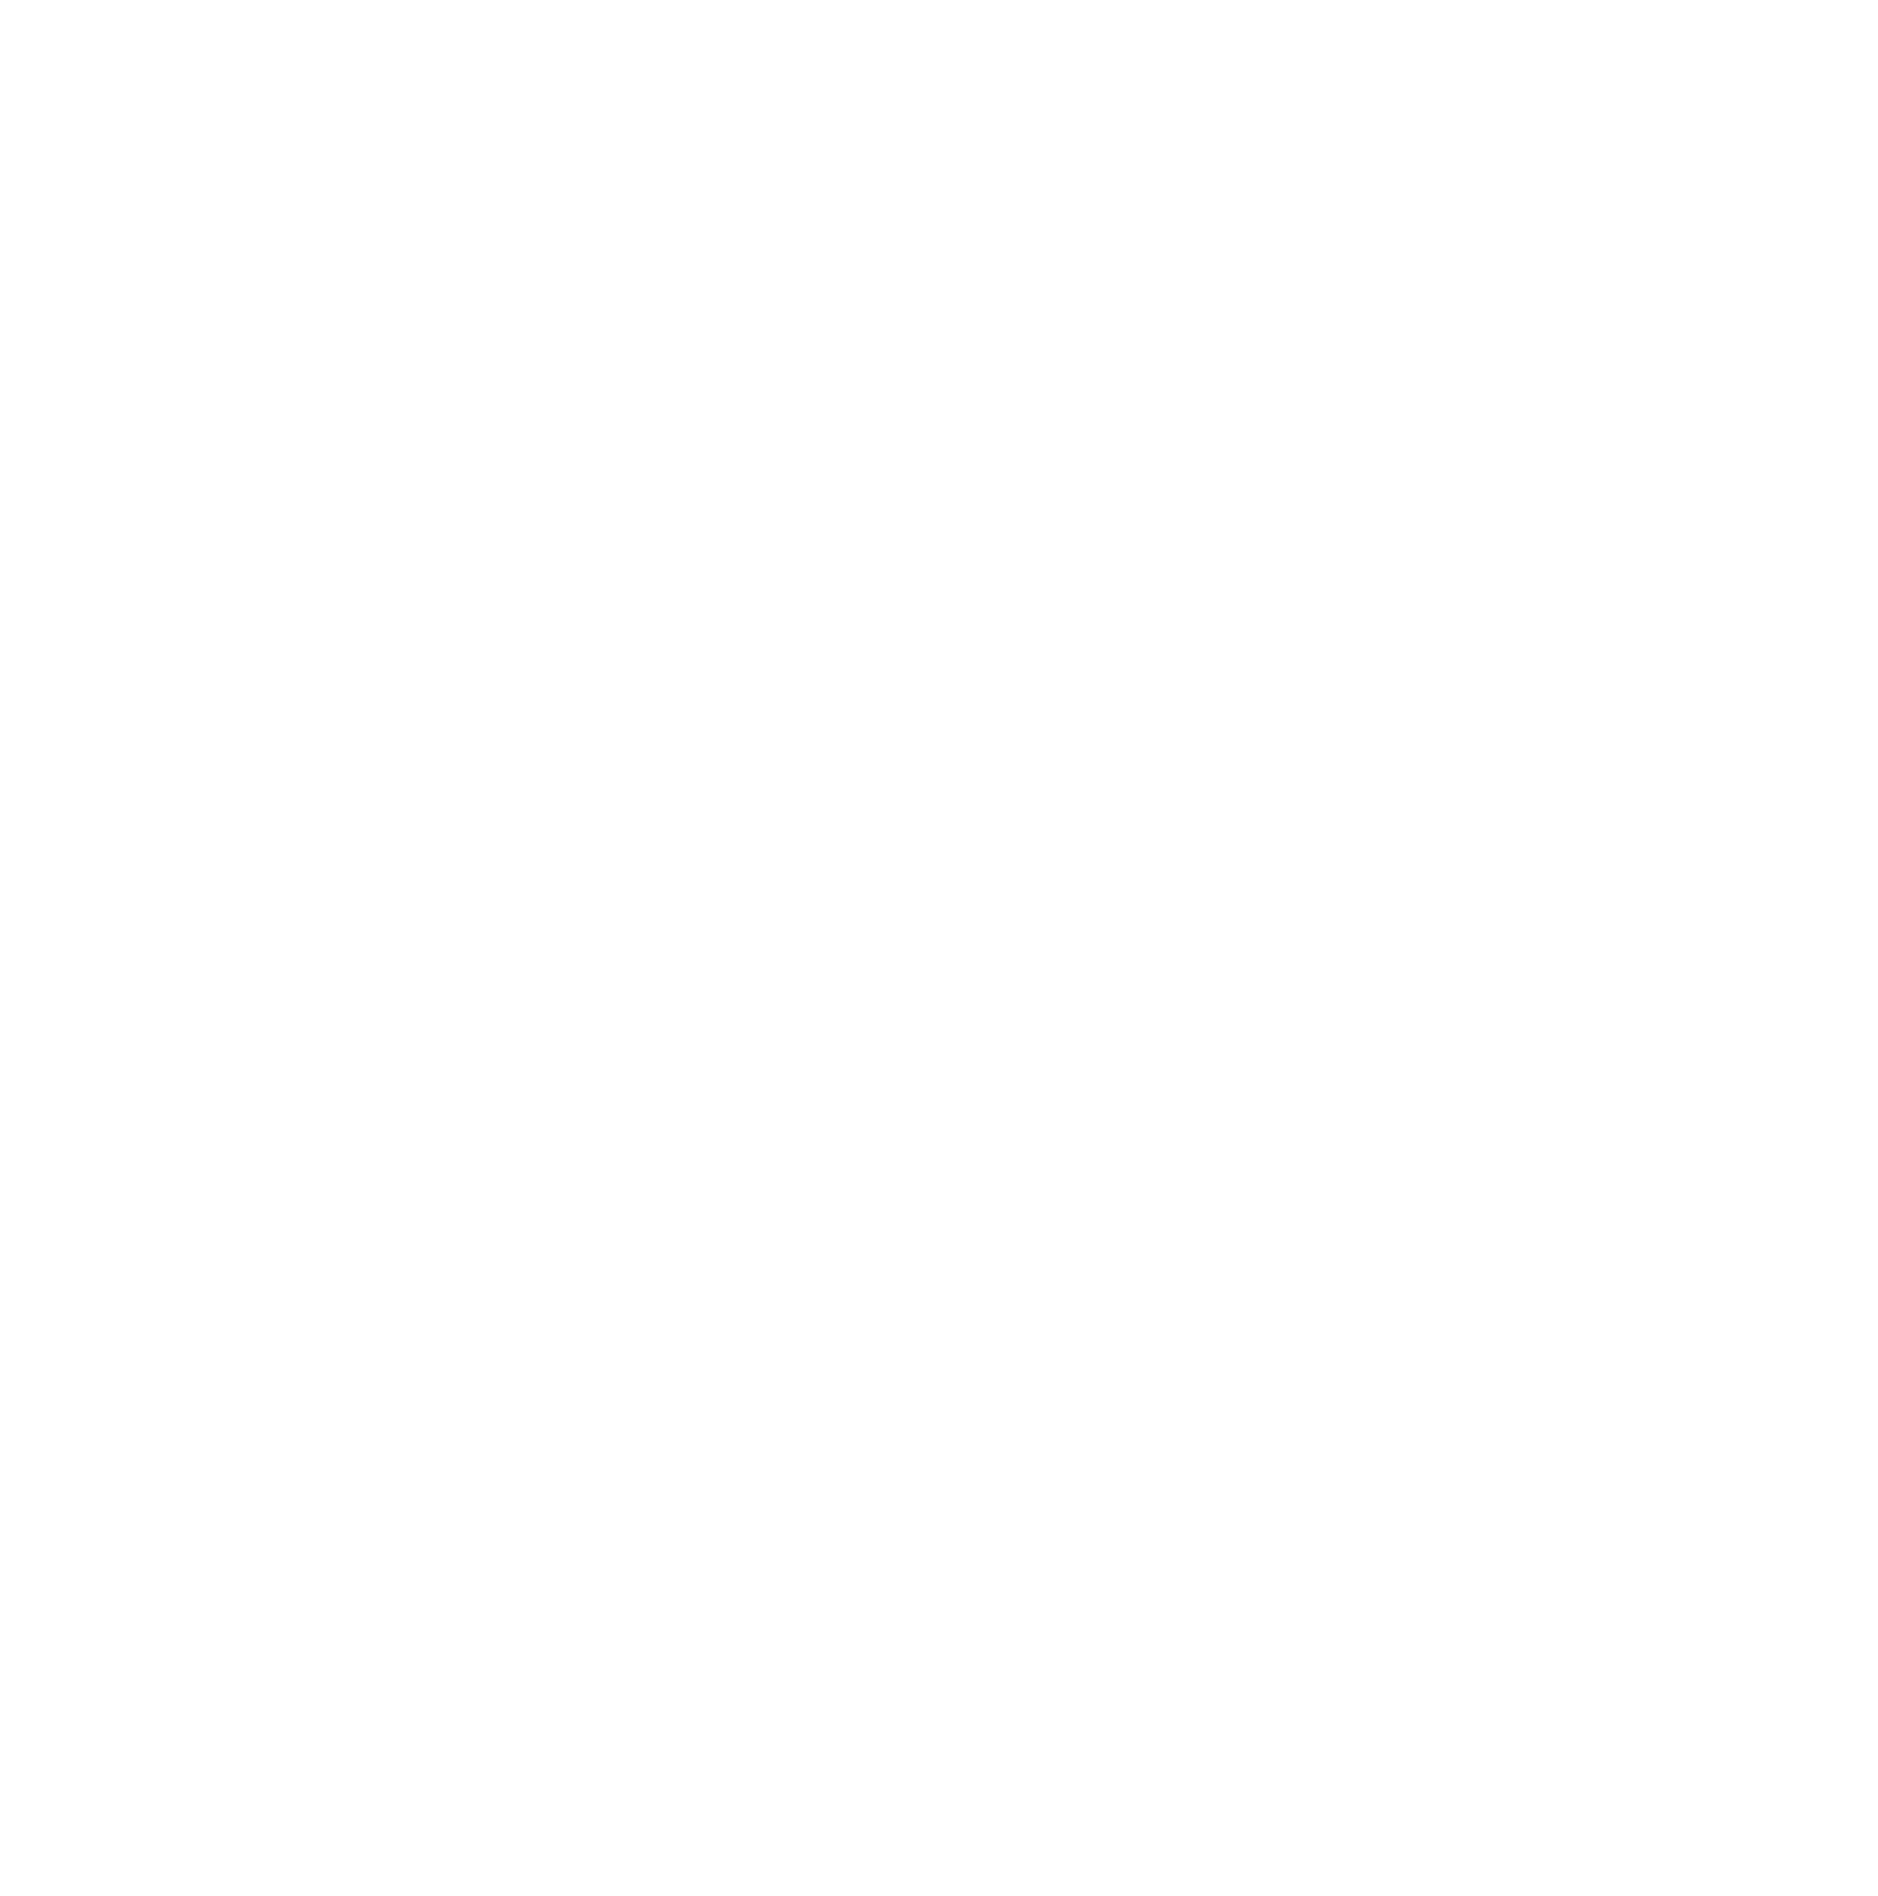 ozaki beef meat